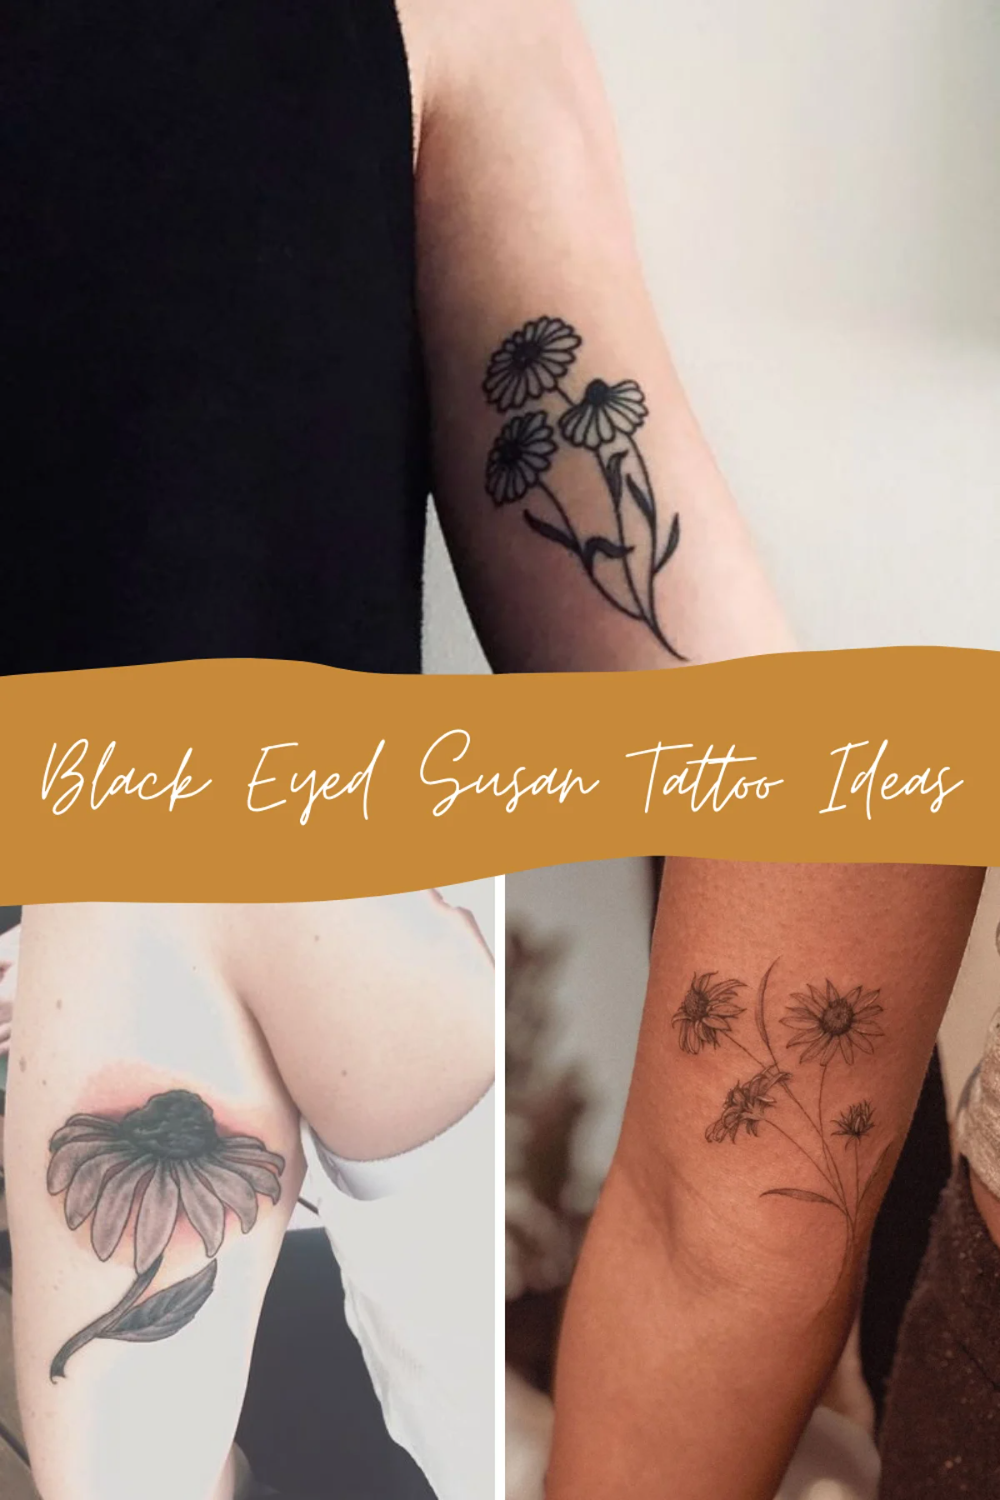 anita pichette share black eyed susan tattoo photos